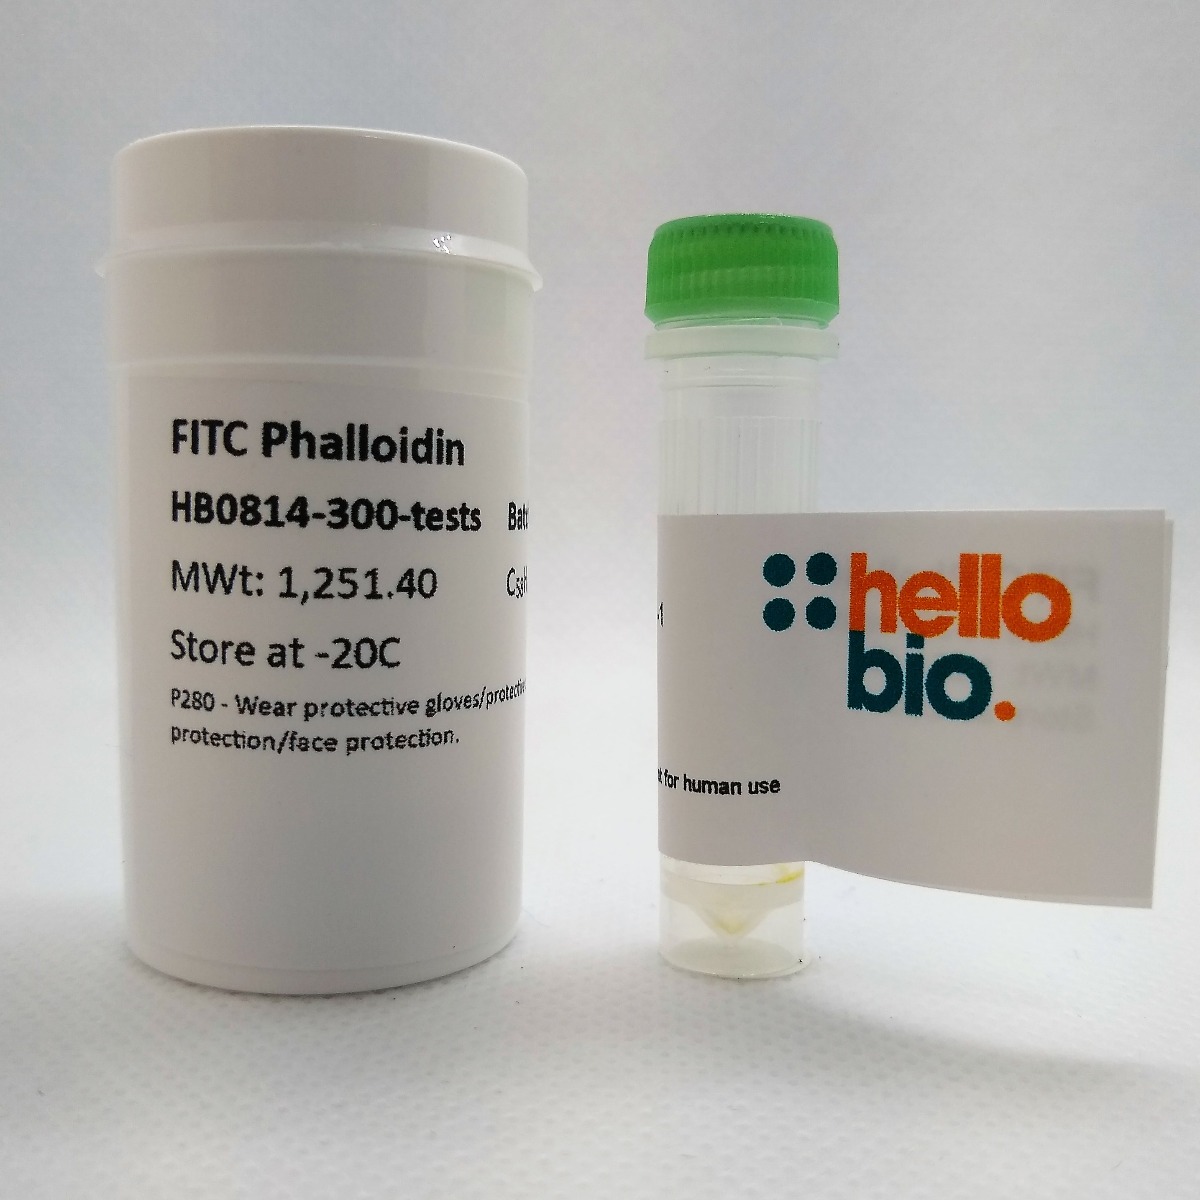 FITC Phalloidin product vial image | Hello Bio